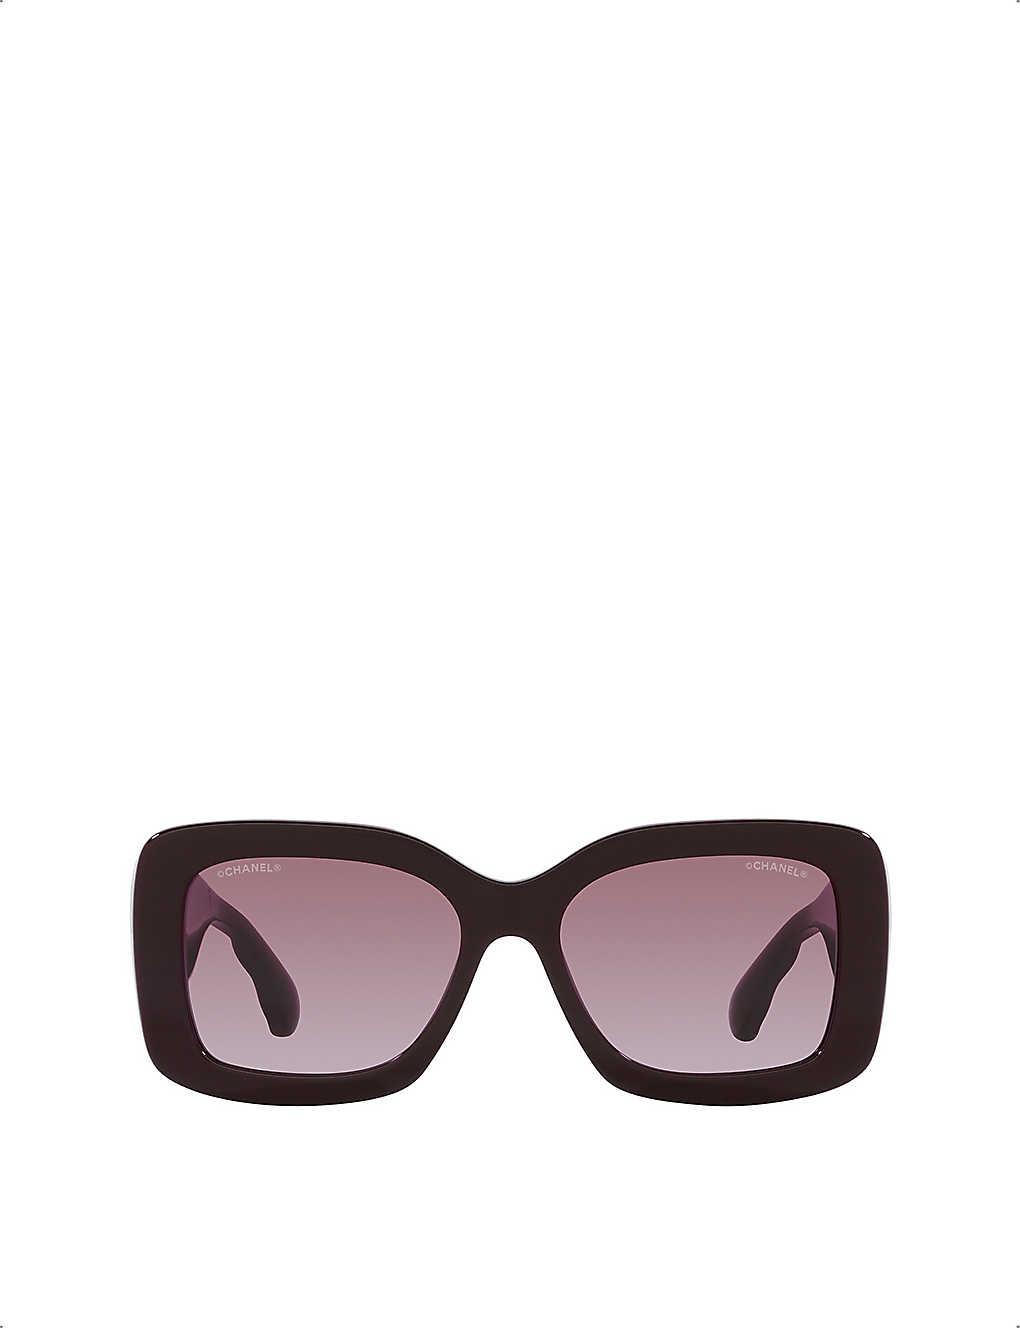 Chanel Tweed Purple/Pink Sunglasses - ShopperBoard